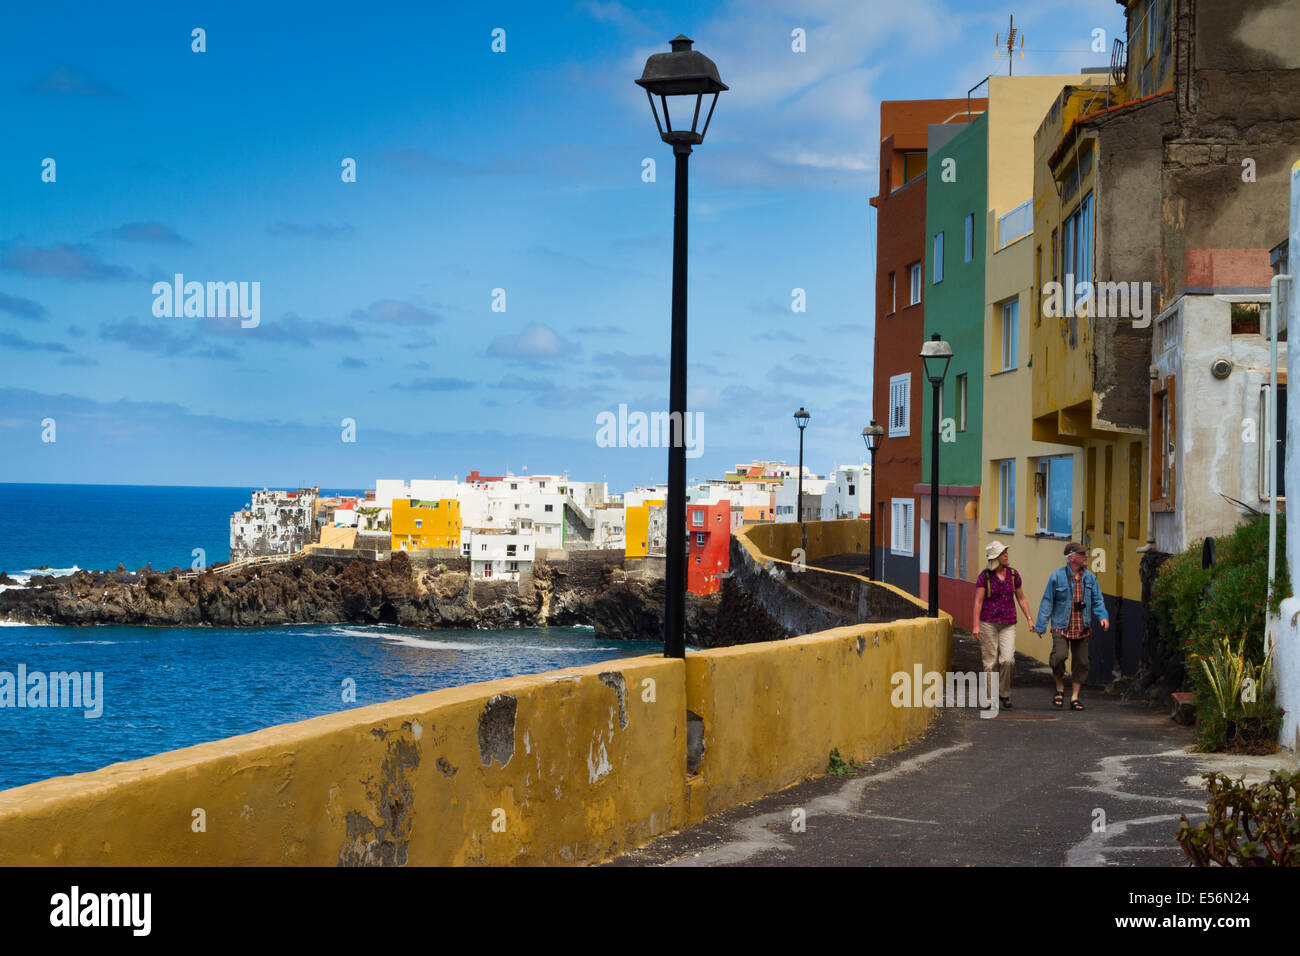 Puerto de la Cruz de la ville. Tenerife, Canaries, Espagne, l'océan Atlantique, l'Europe. Banque D'Images